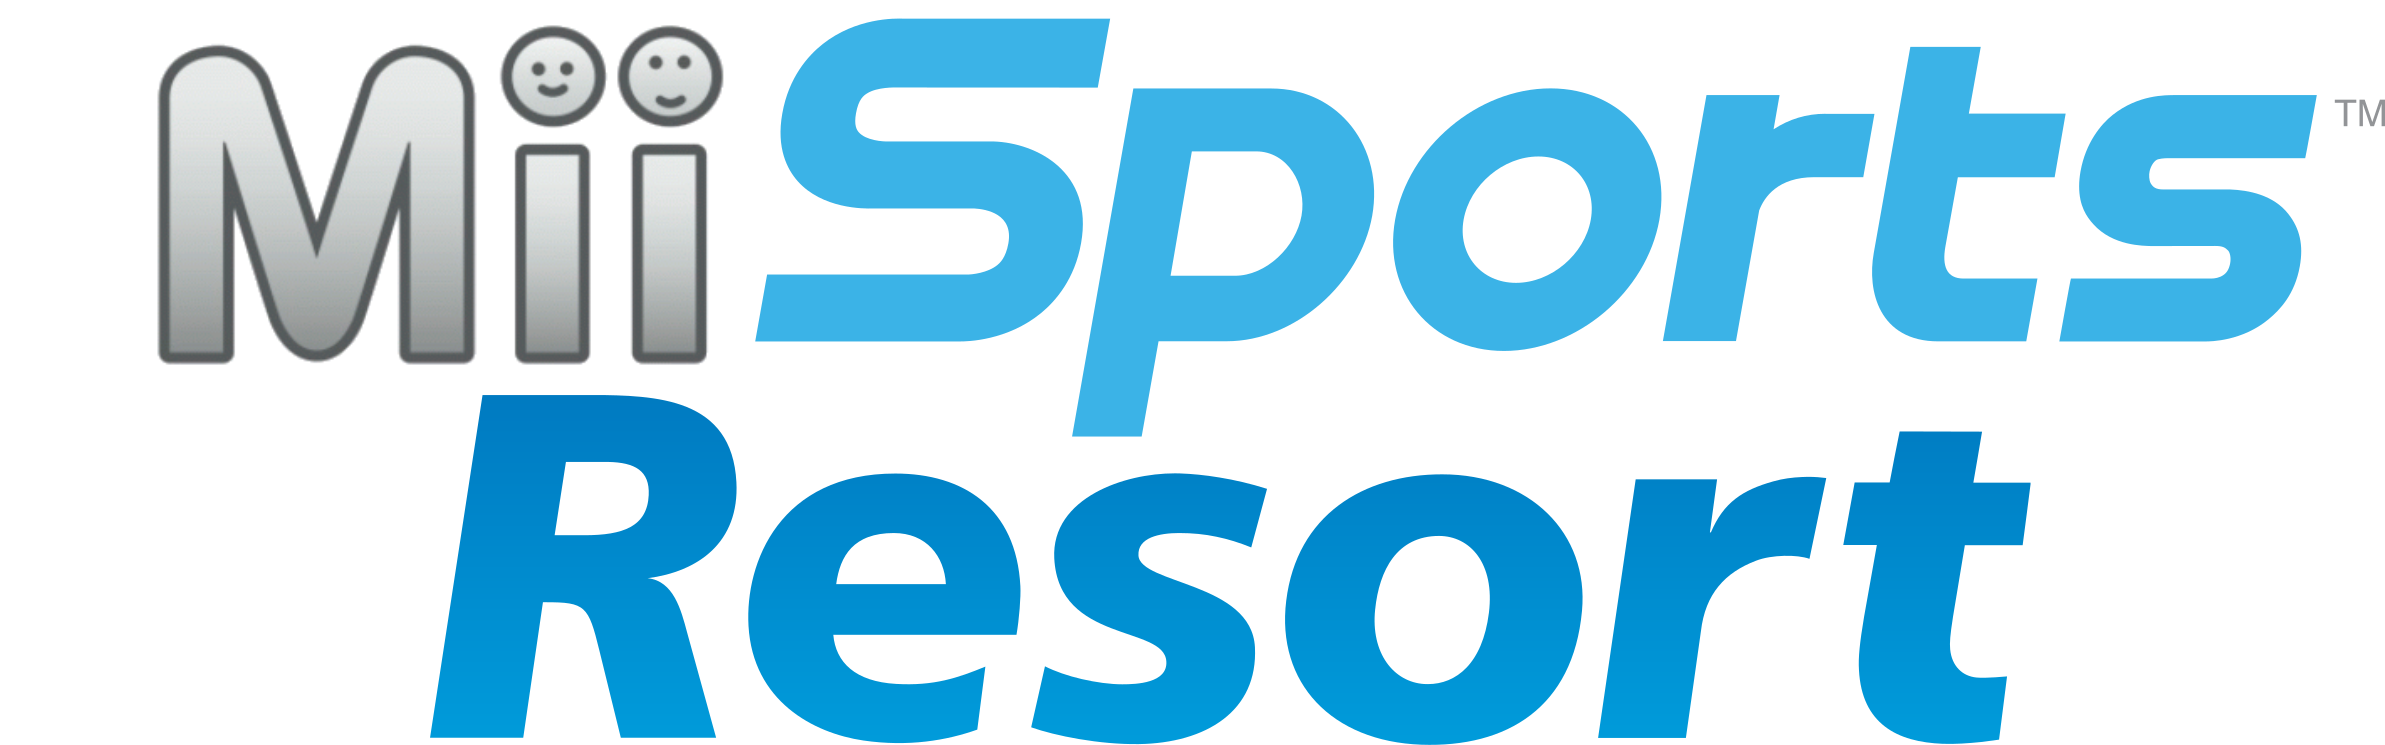 Archivo:Wii sports resort logo.svg - Wikipedia, la enciclopedia libre